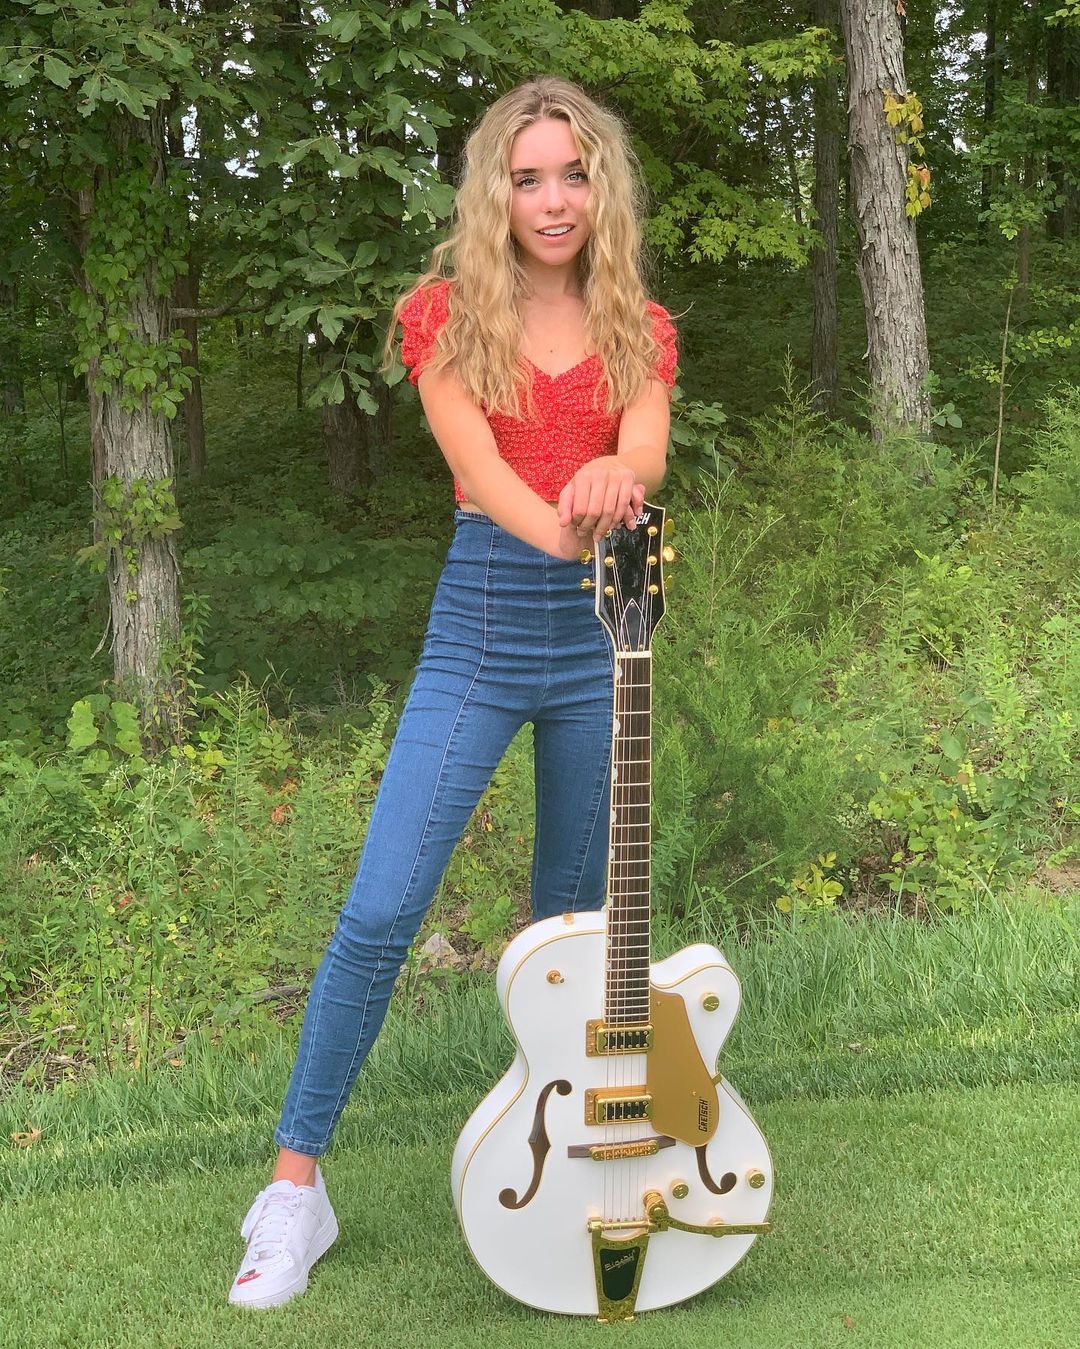 Jeena Davis standing with a guitar